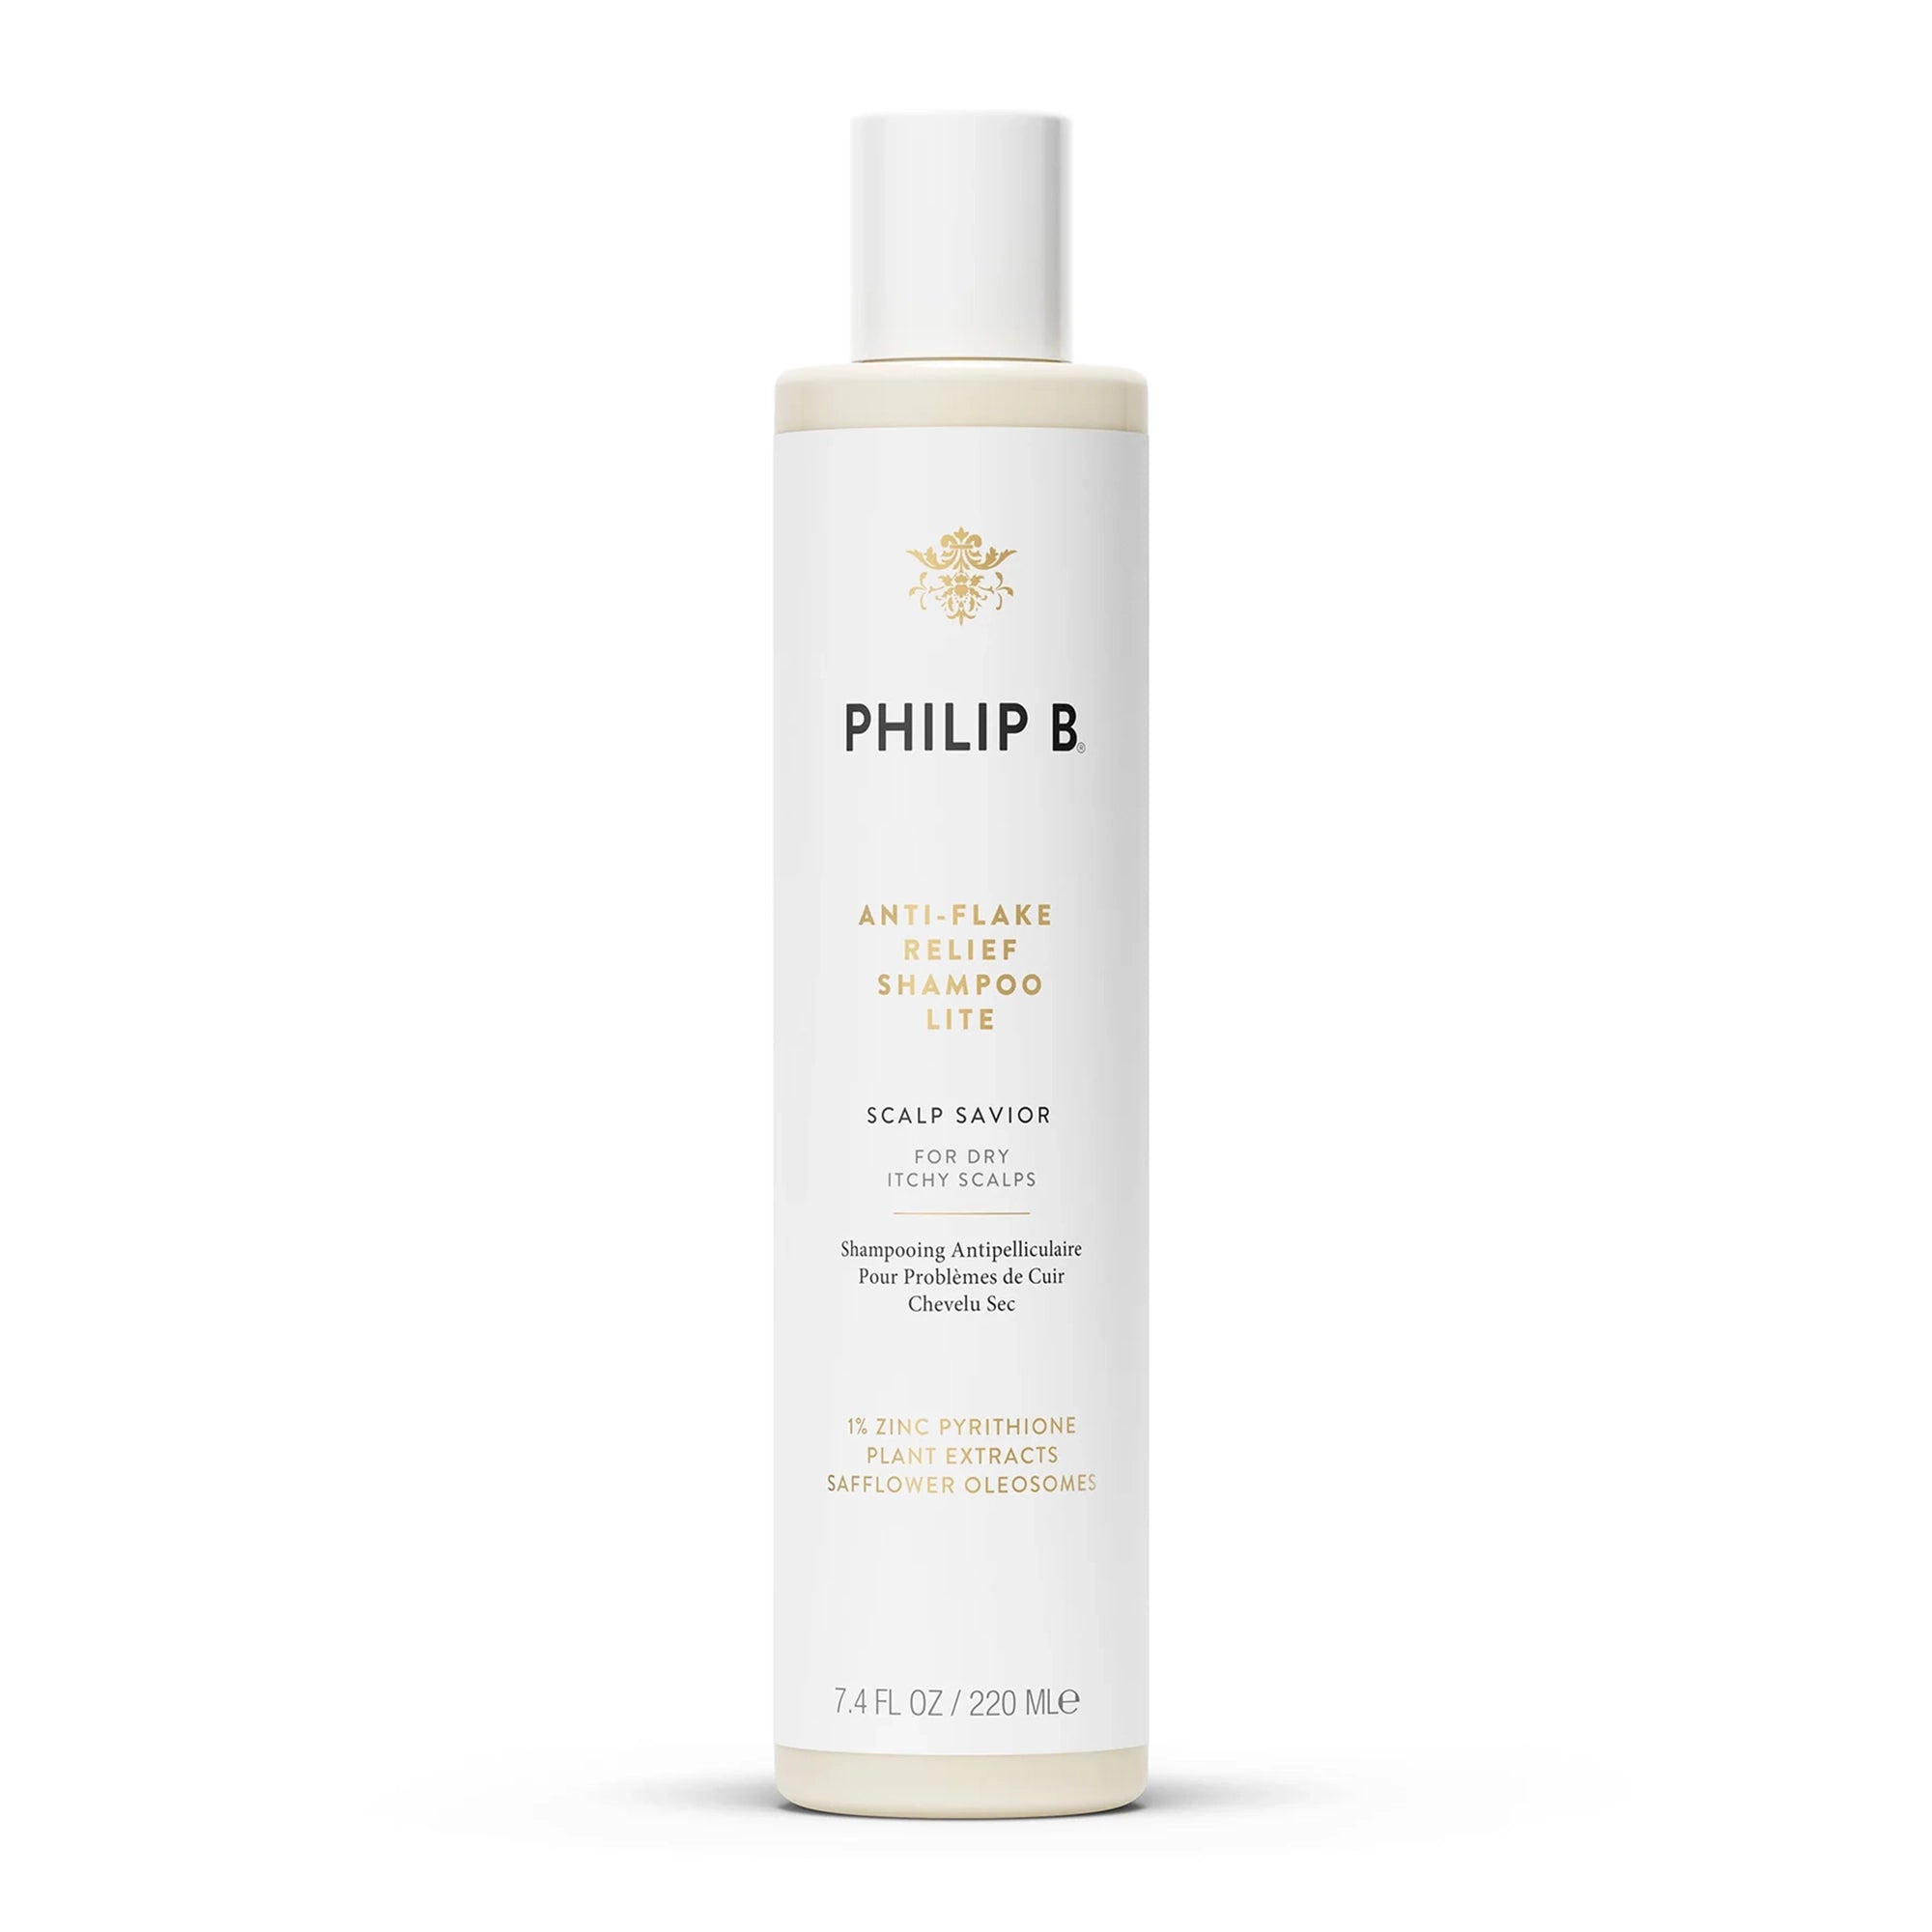 Philip B Anti-Flake Relief Shampoo Lite - 7.4 oz